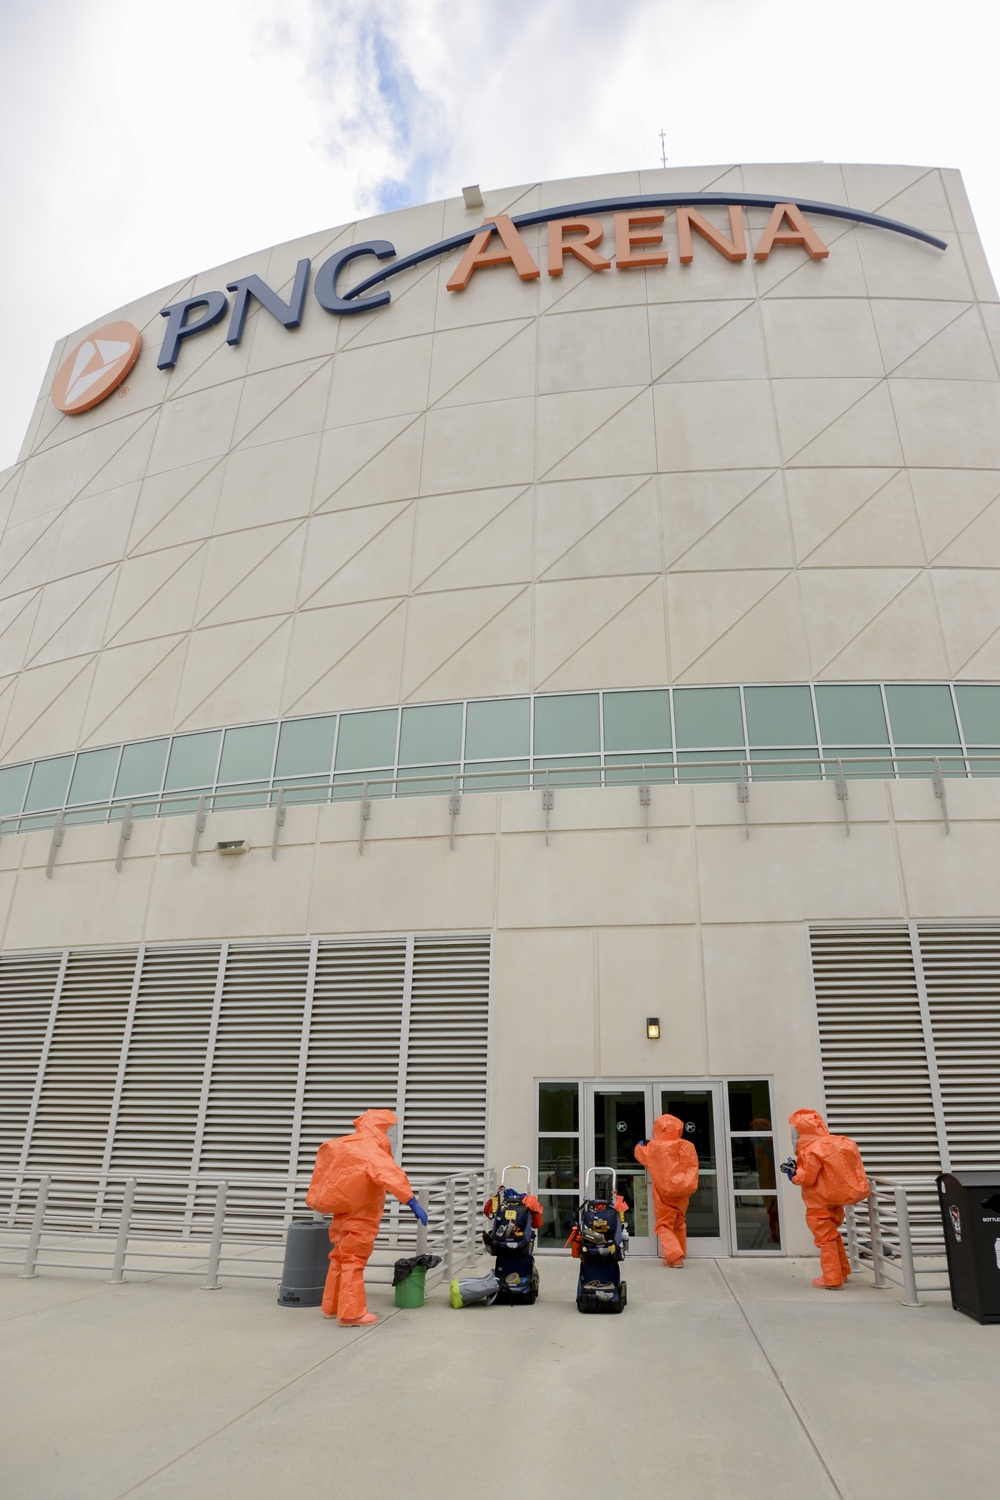 NCNG Civil Support Team trains at PNC Arena